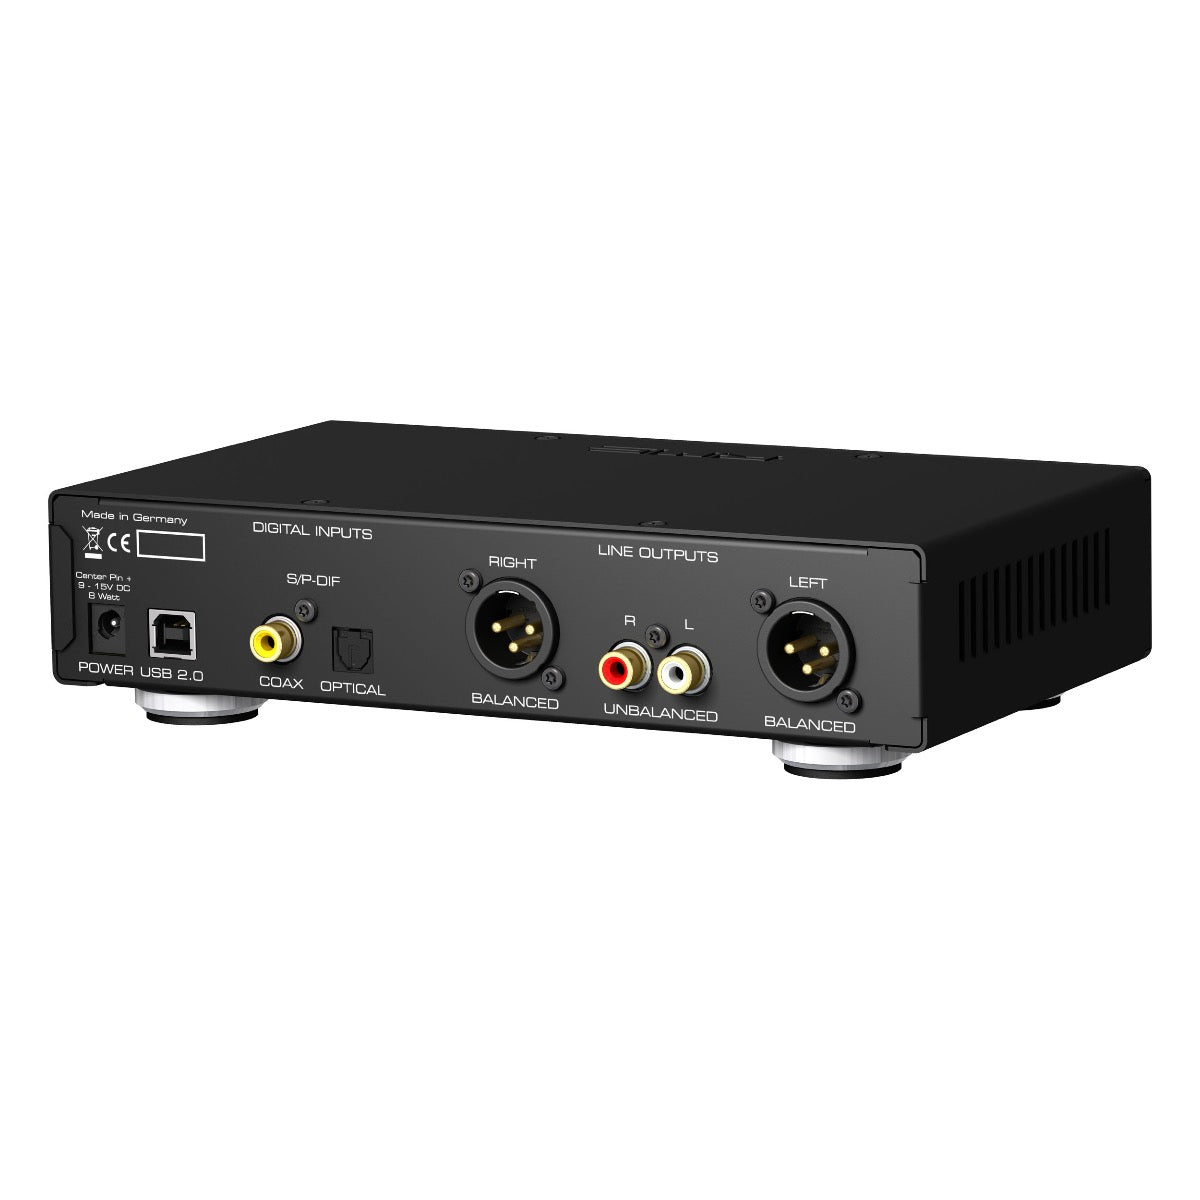 RME ADI2 DAC FS Ultra-fidelity 2 Channel DA Converter and Headphone Amplifier